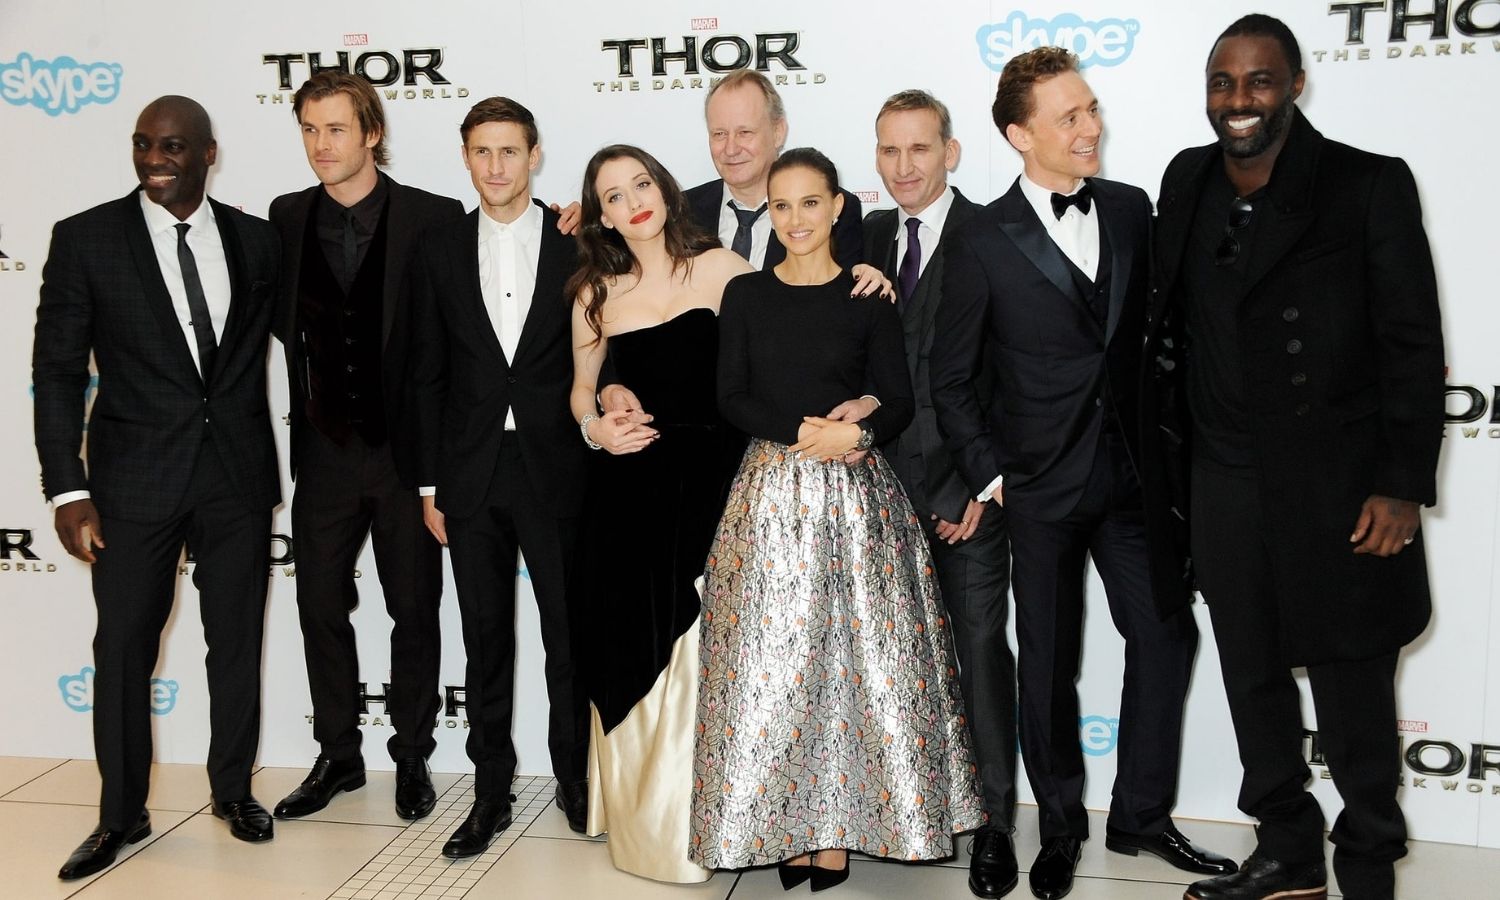 OTD in 2013: The American superhero movie "Thor: The Dark World" premiered in London.